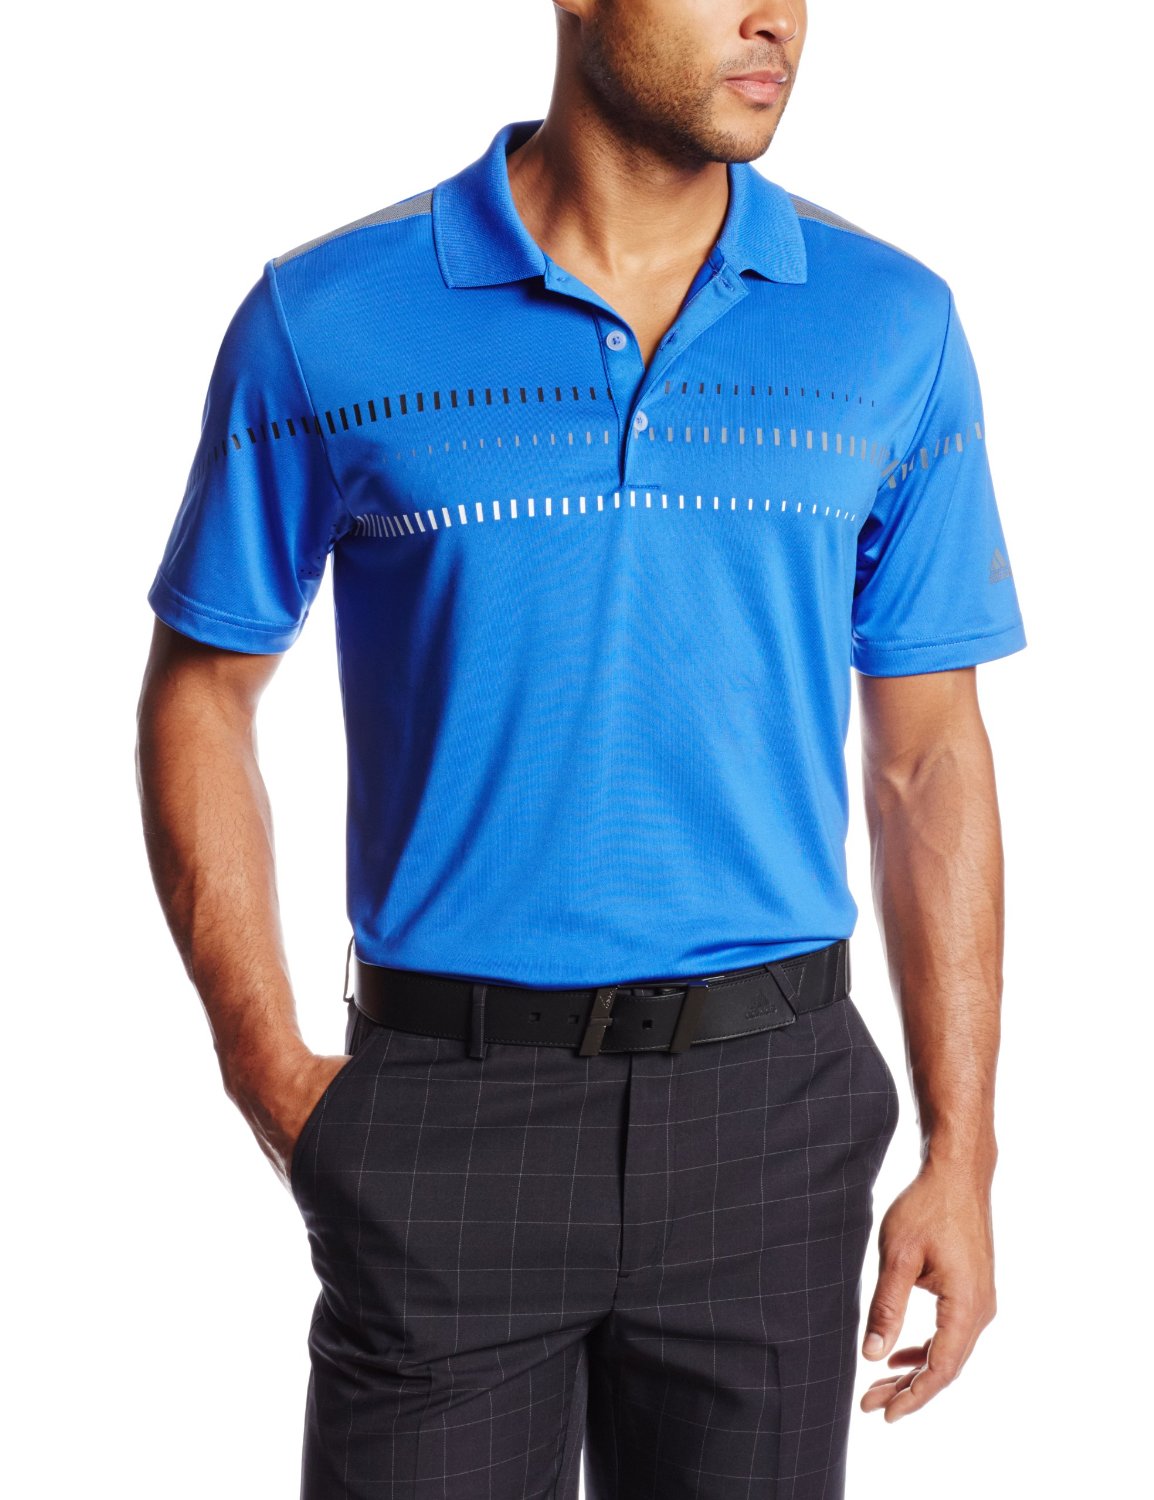 Mens Adidas Puremotion Tour Climacool Digital Print Golf Polo Shirts